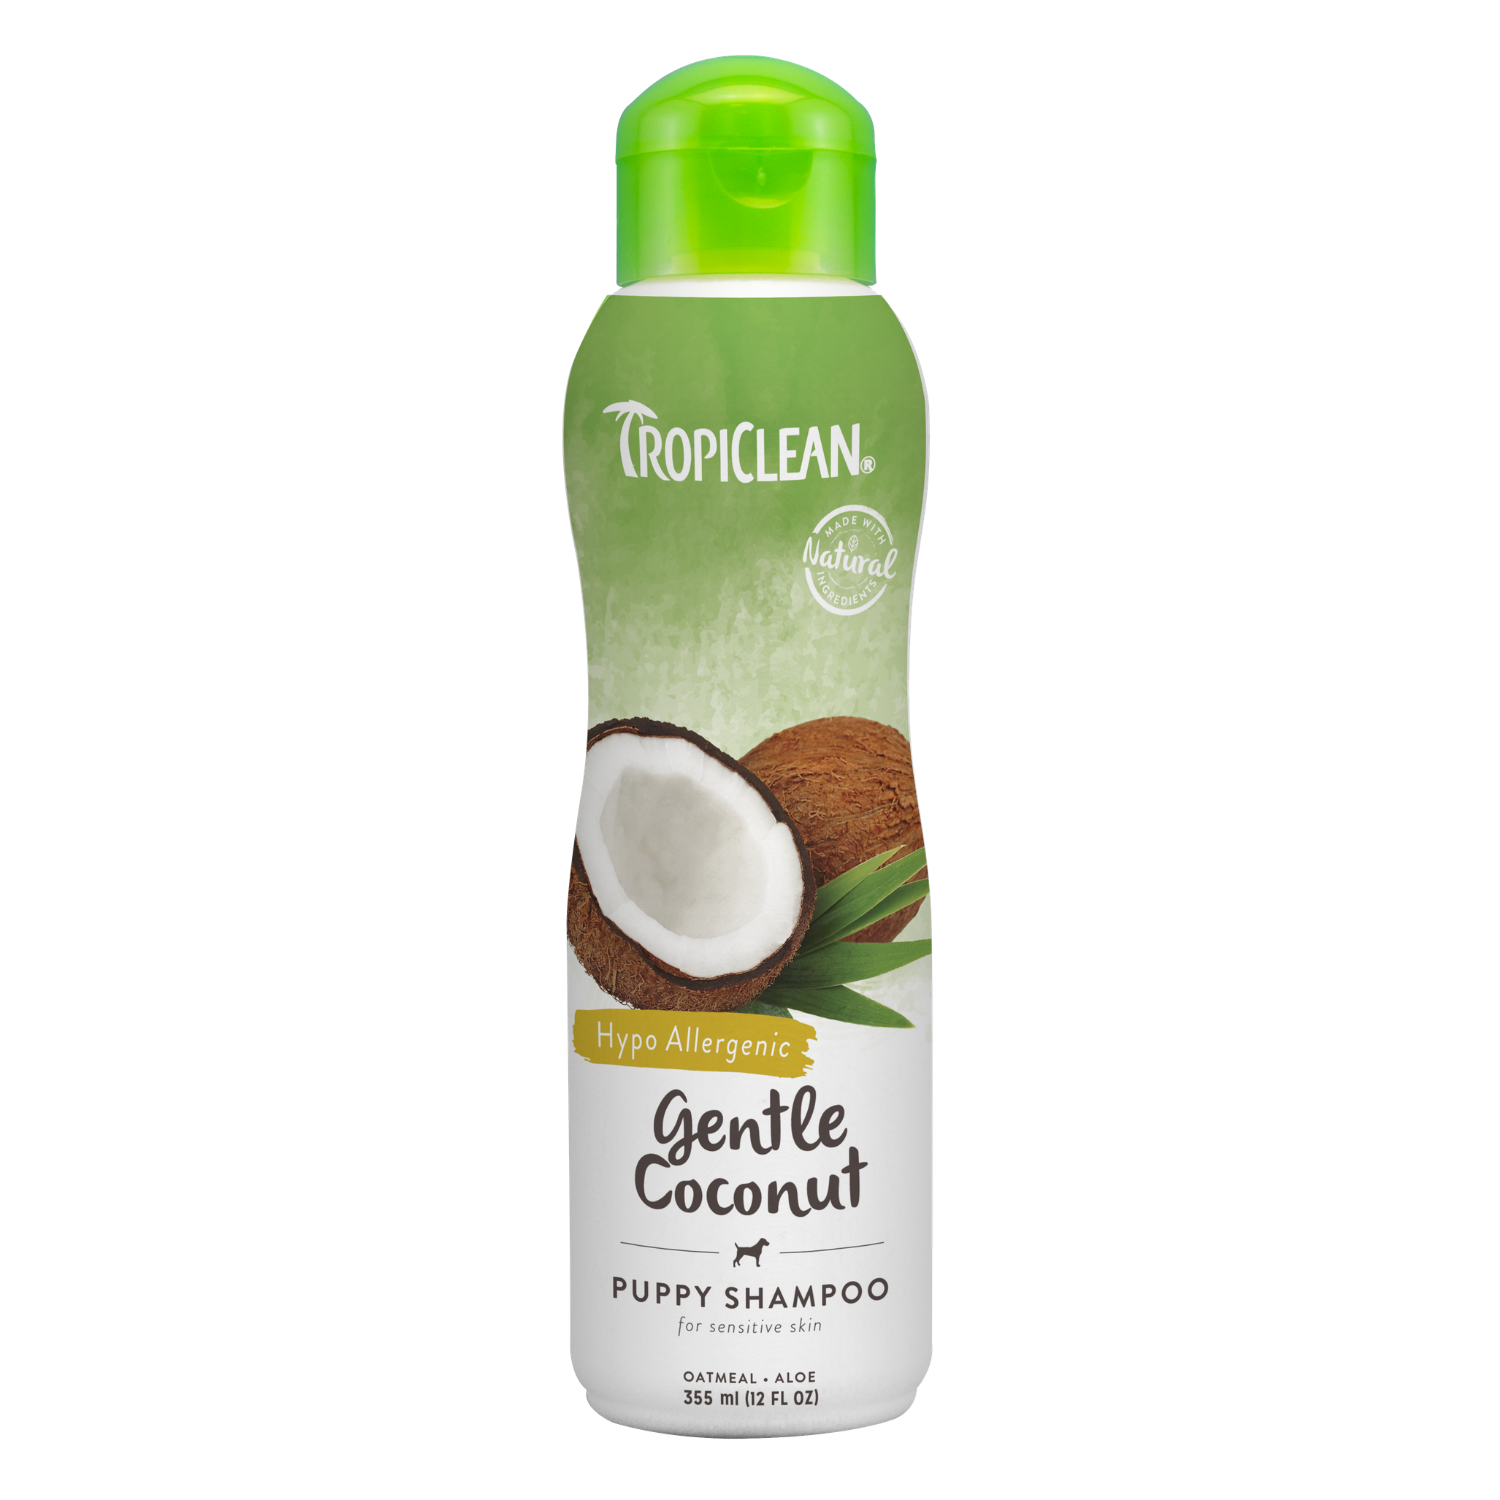 Tropiclean Gentle Coconut Puppy Shampoo (Hypoallergenic) - 355ml